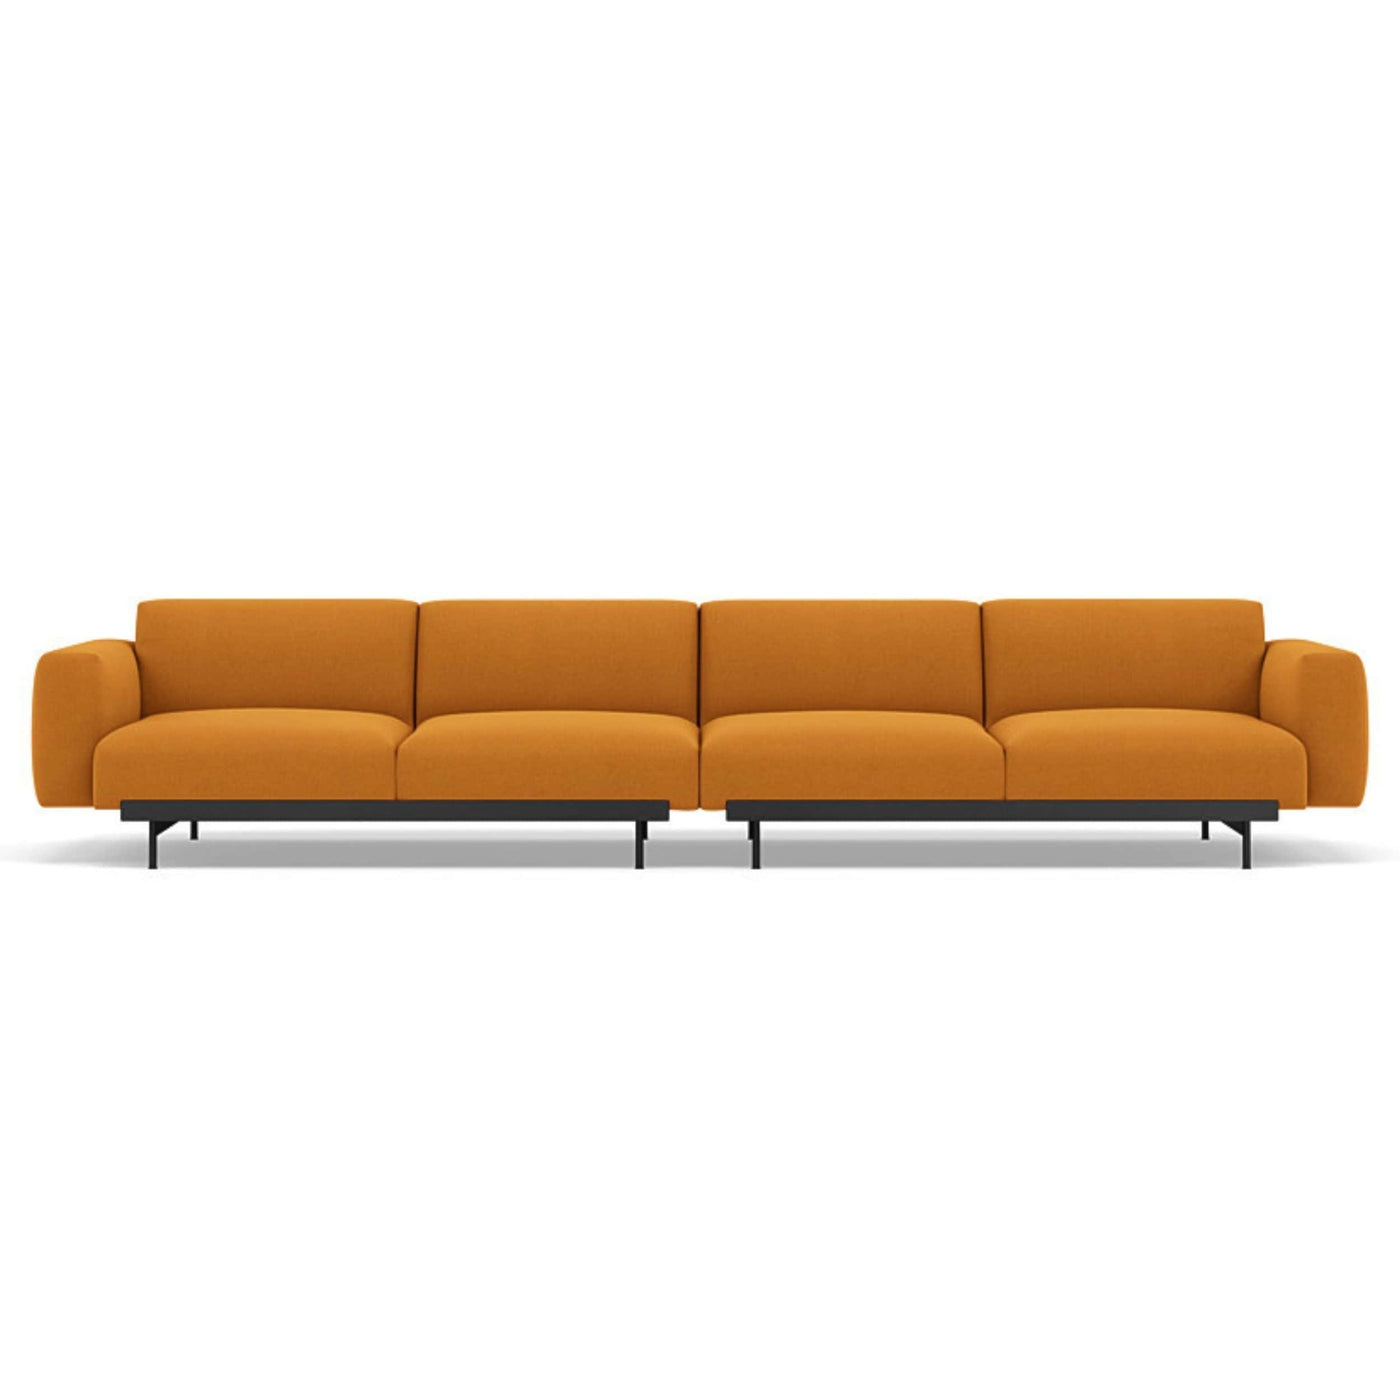 Muuto In Situ Modular 4 Seater Sofa configuration 1 in vidar 472. Made to order from someday designs. #colour_vidar-472